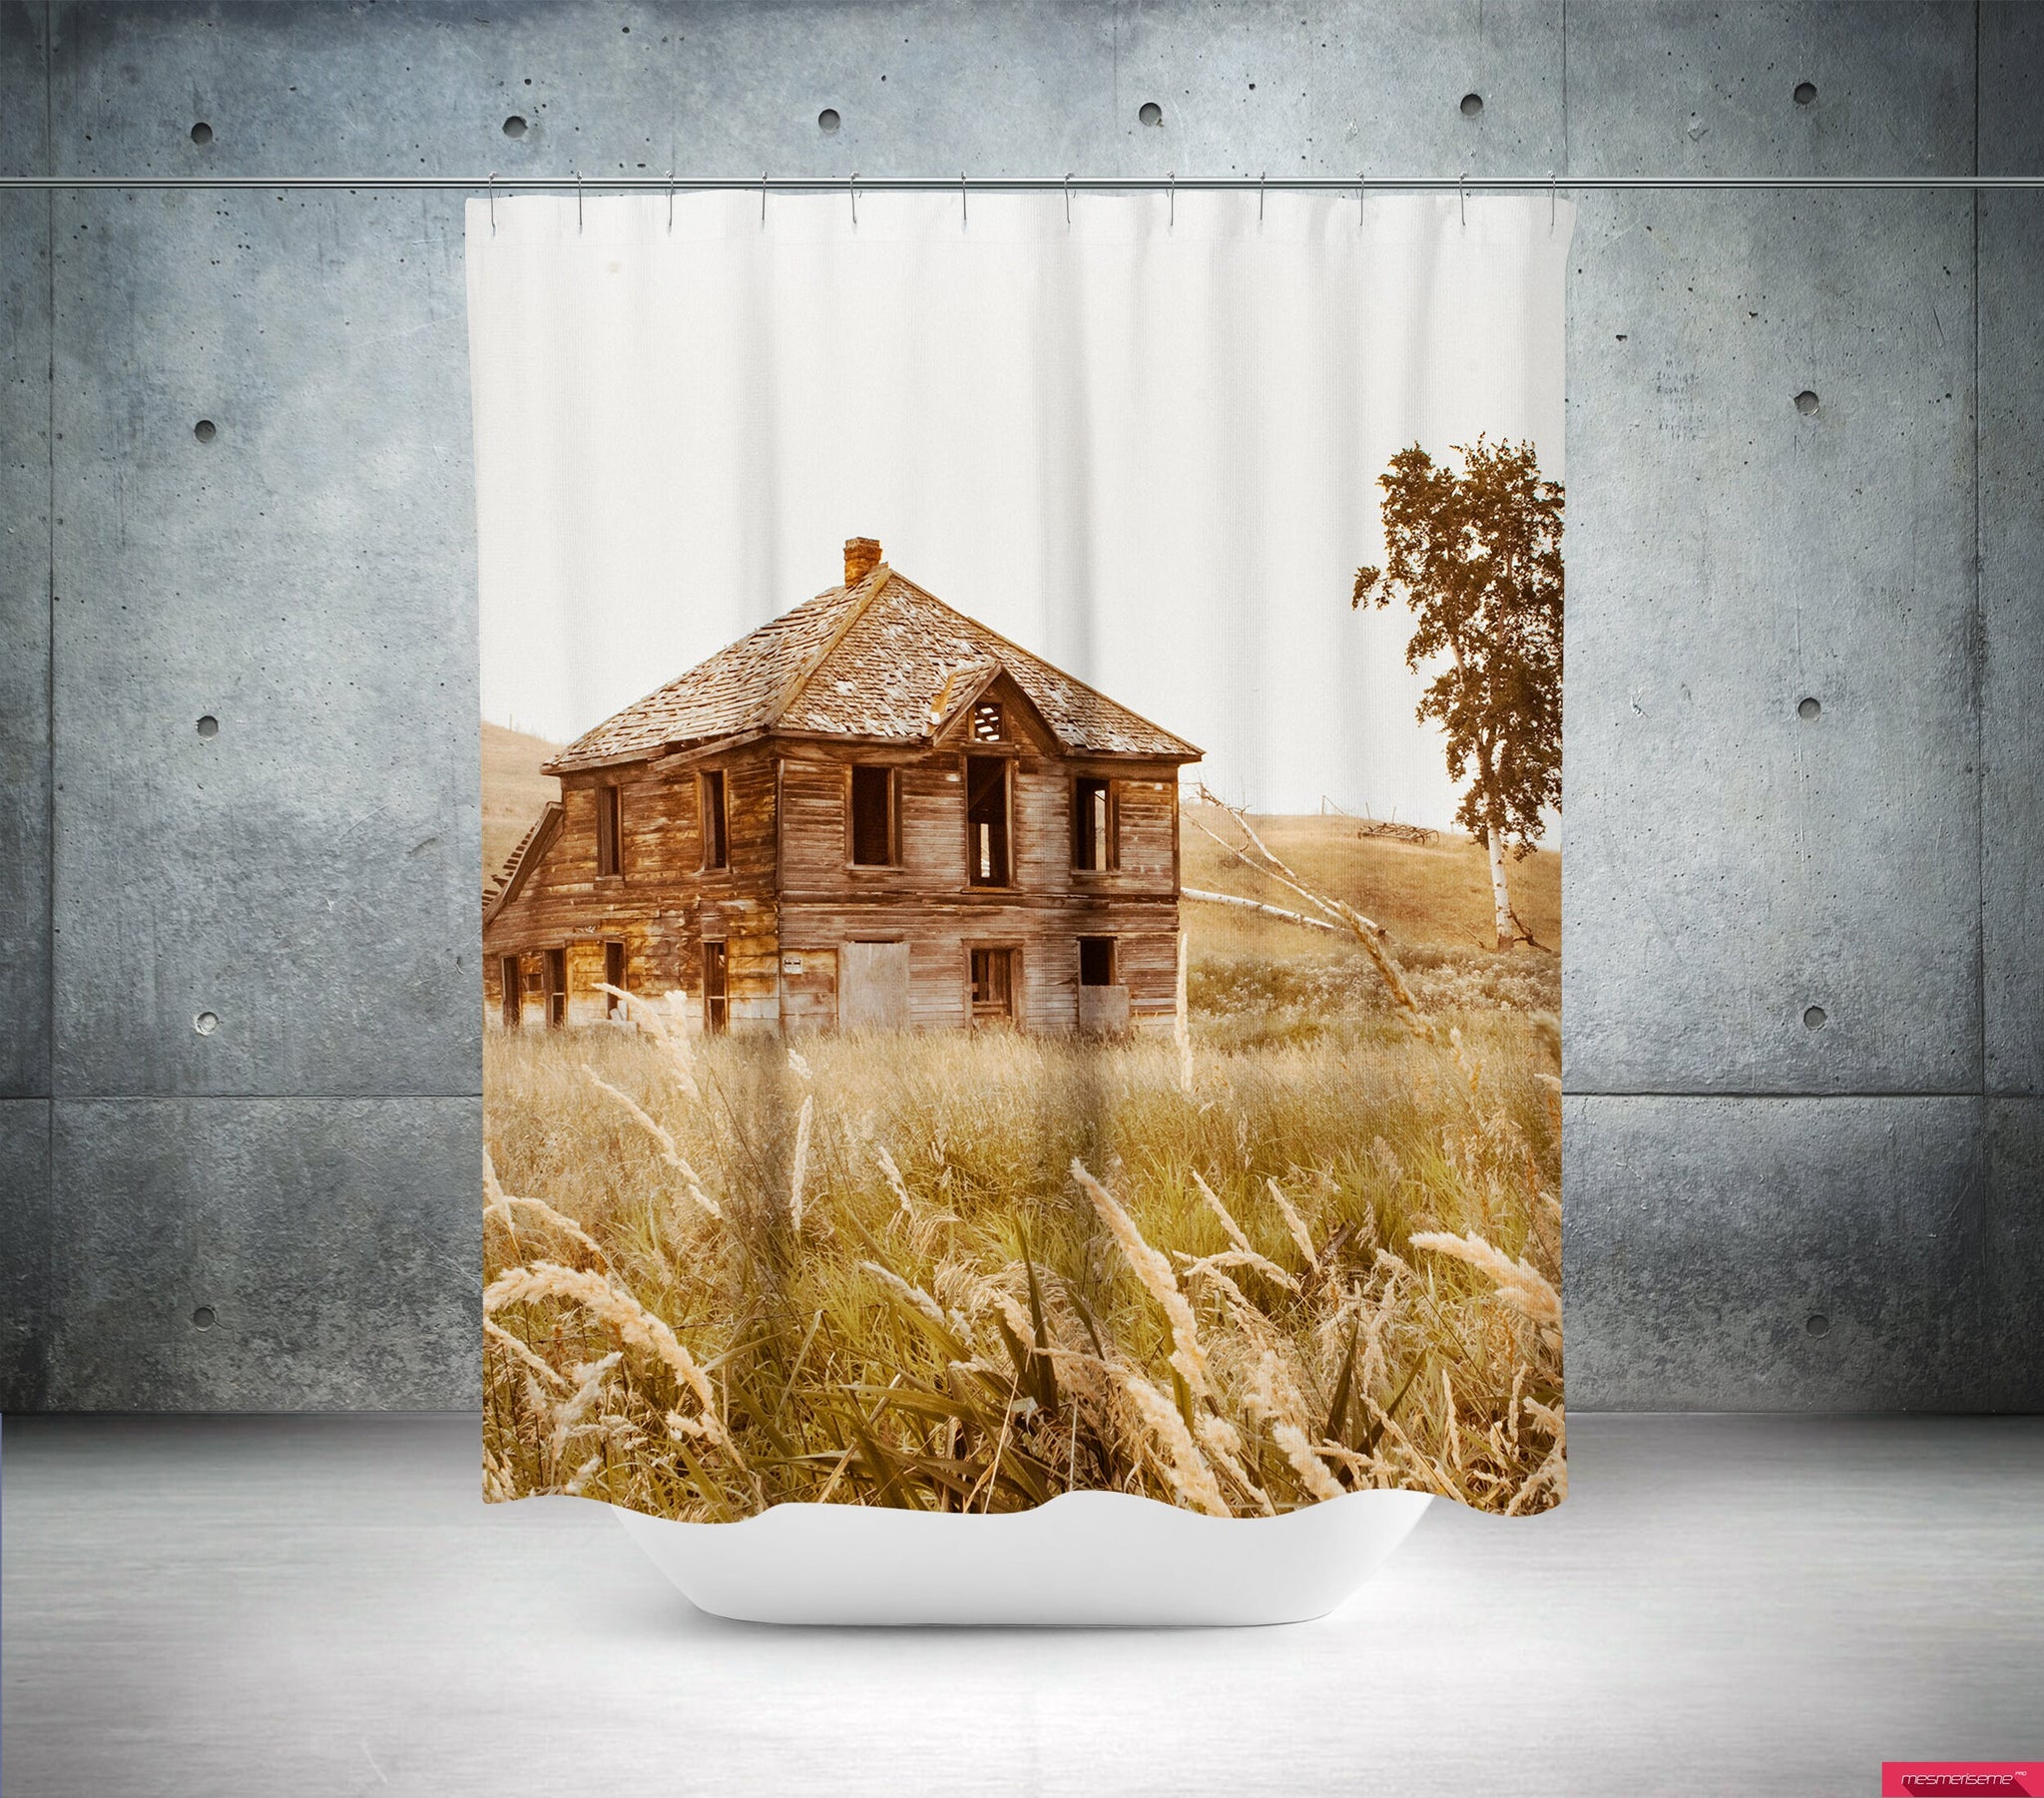 Rustic Farmhouse Shower Curtain 71x74 inch Cabin Homestead